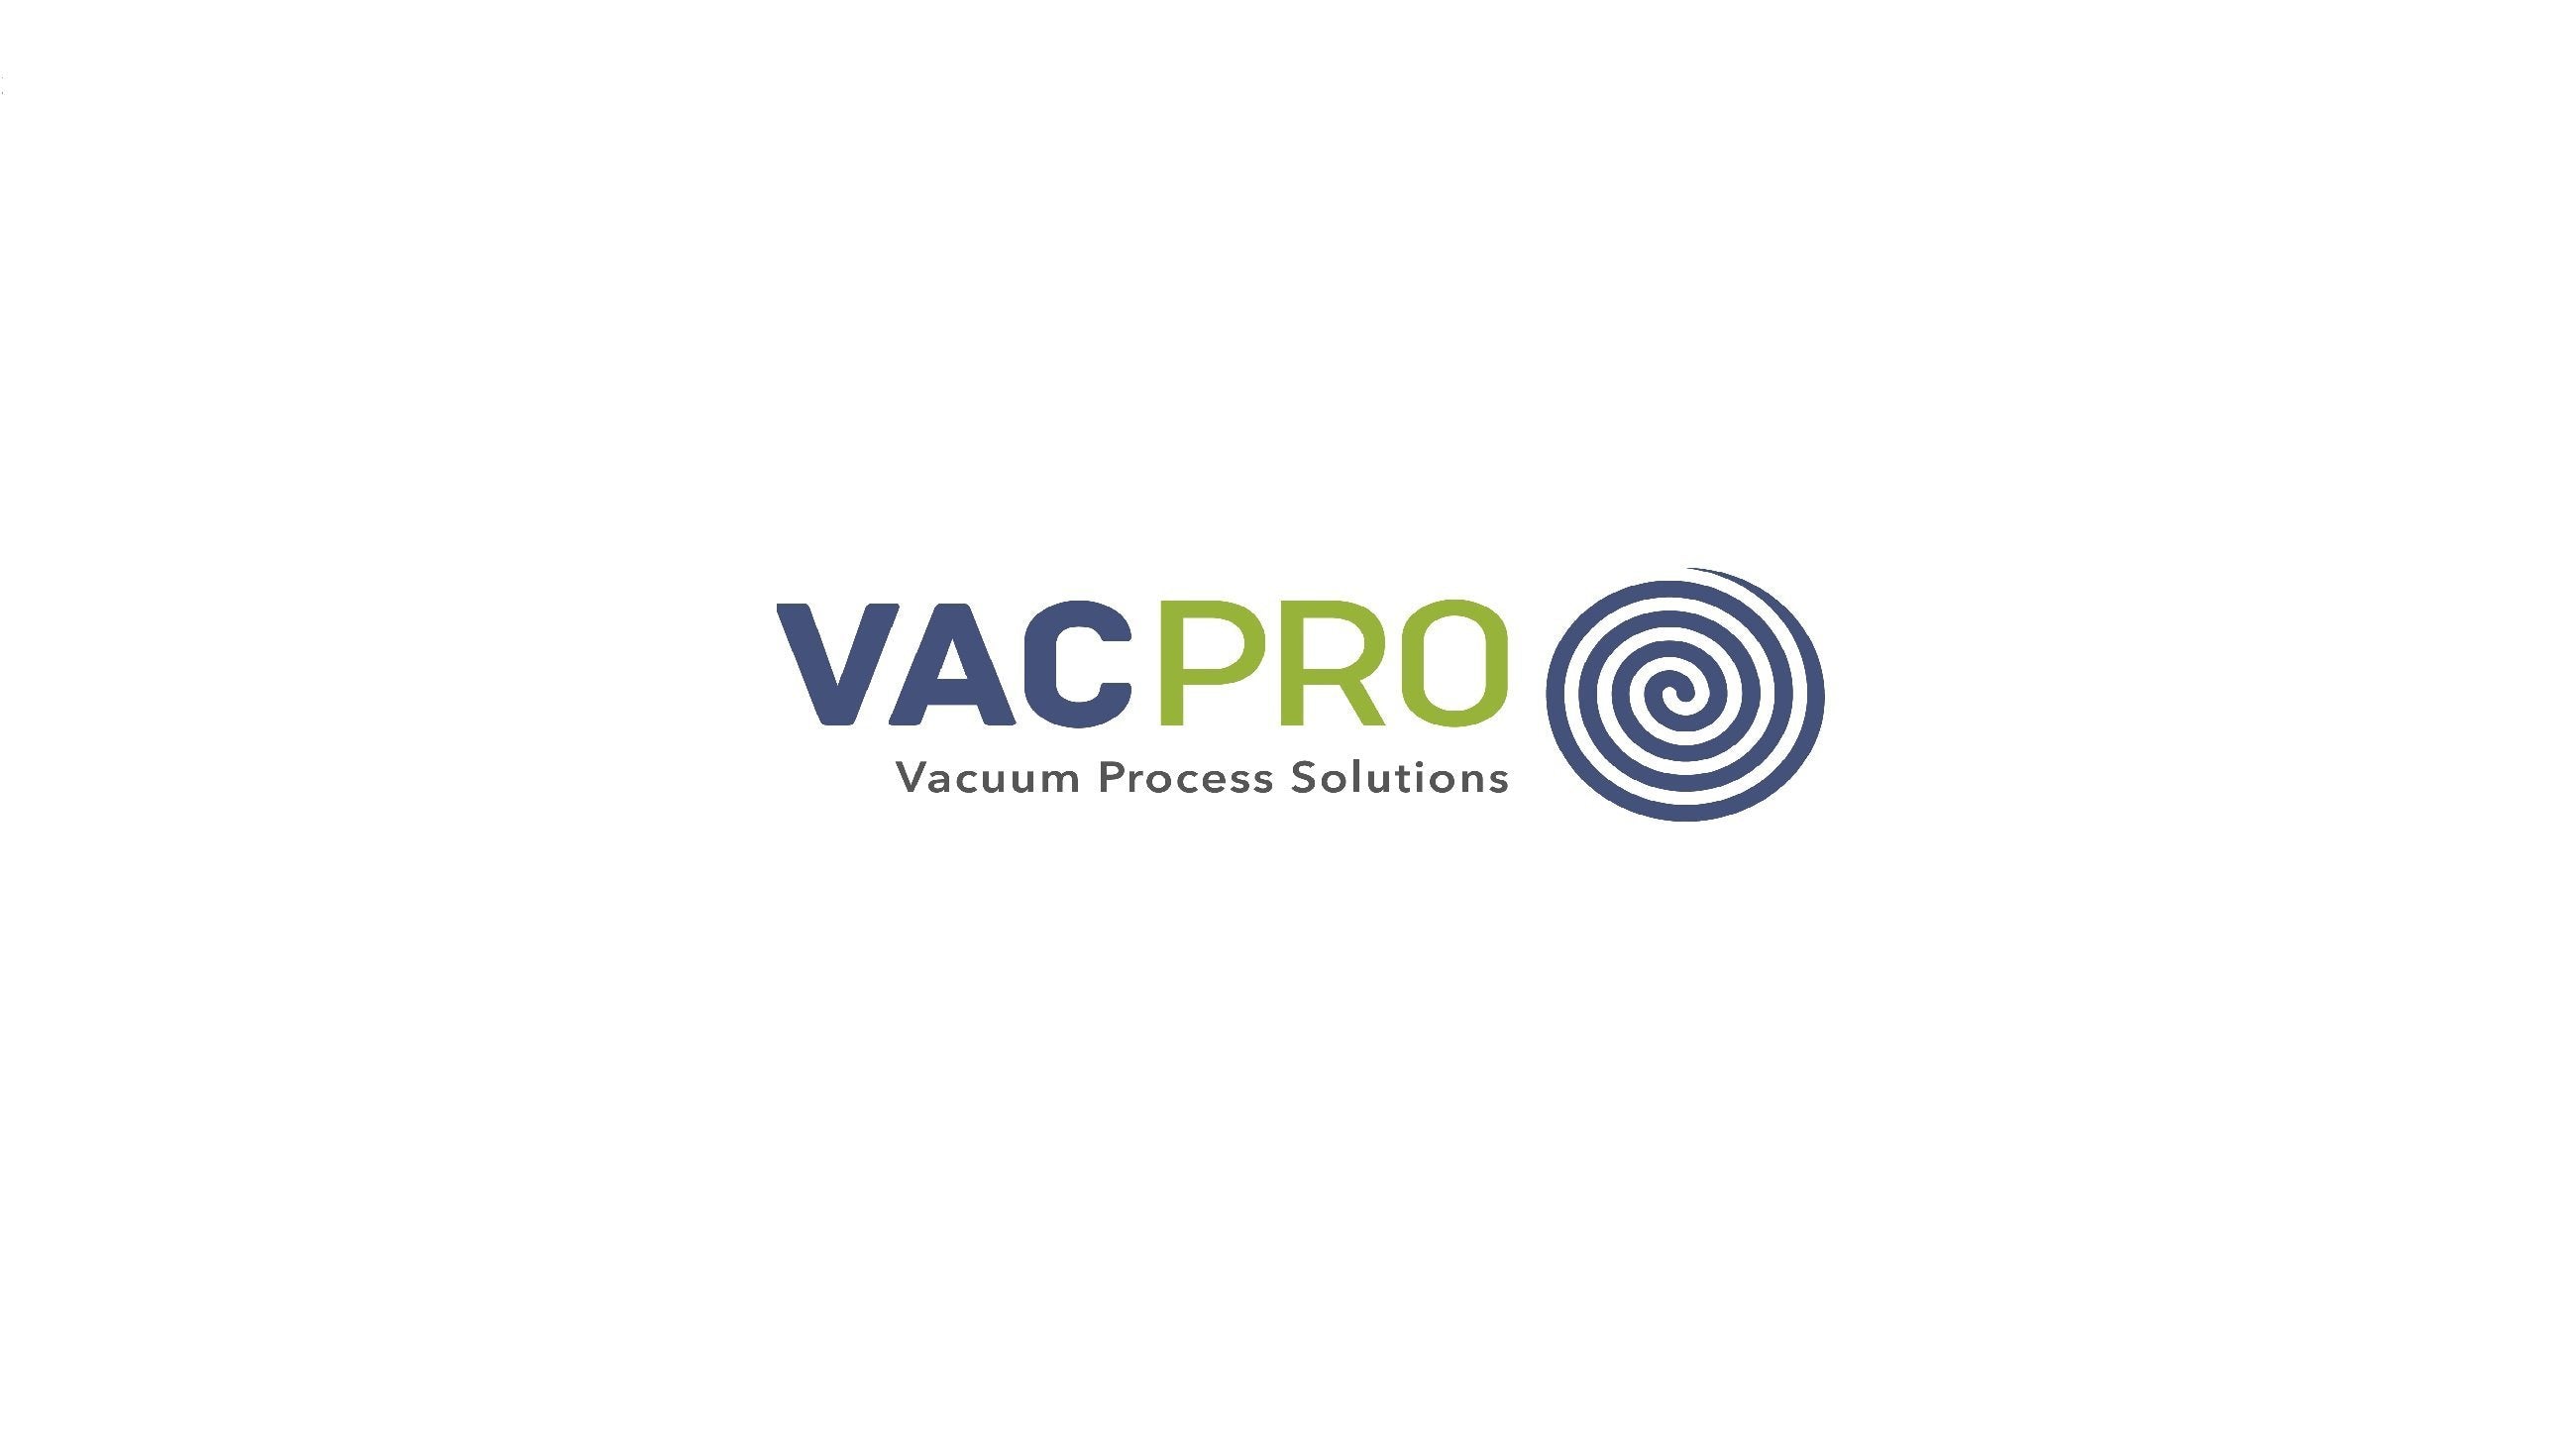 VACPRO Online store